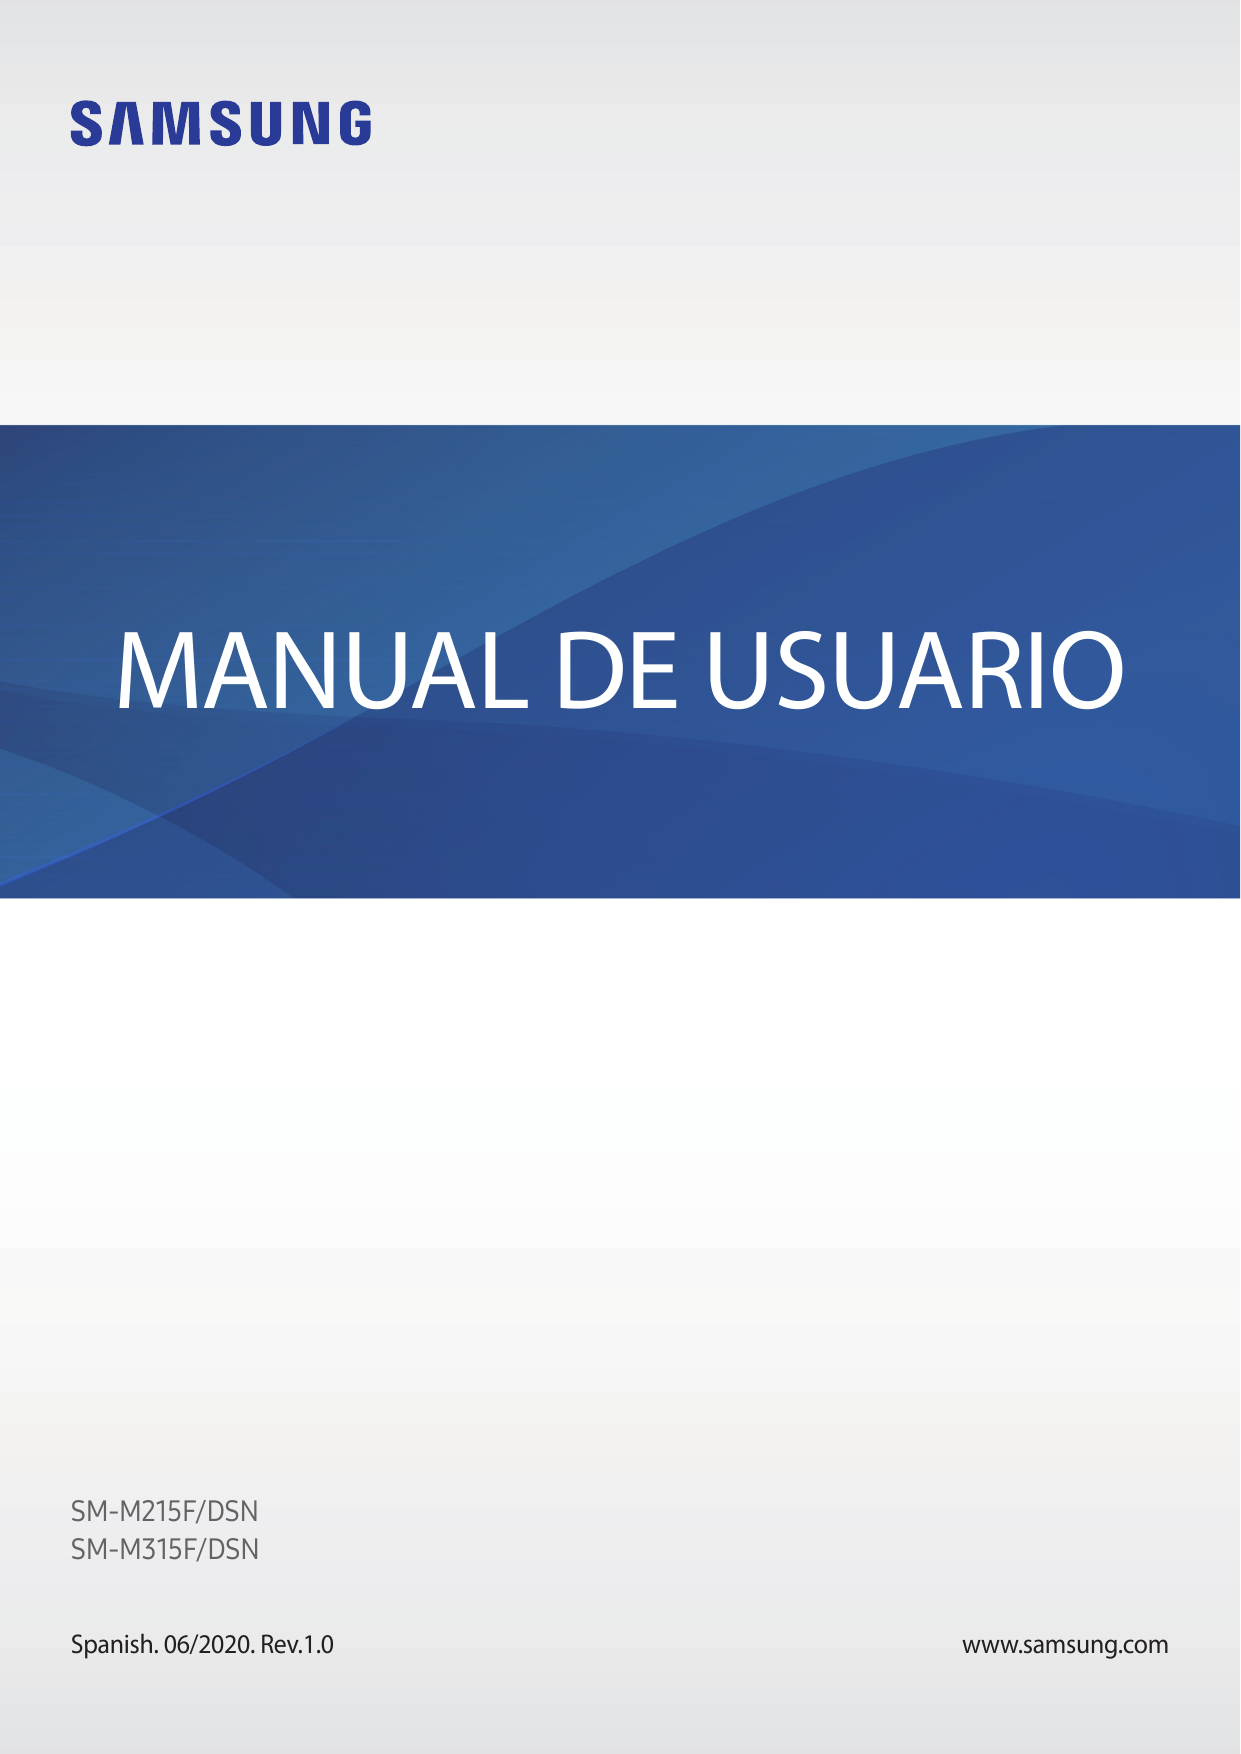 MANUAL DE USUARIOSM-M215F/DSNSM-M315F/DSNSpanish. 06/2020. Rev.1.0www.samsung.com